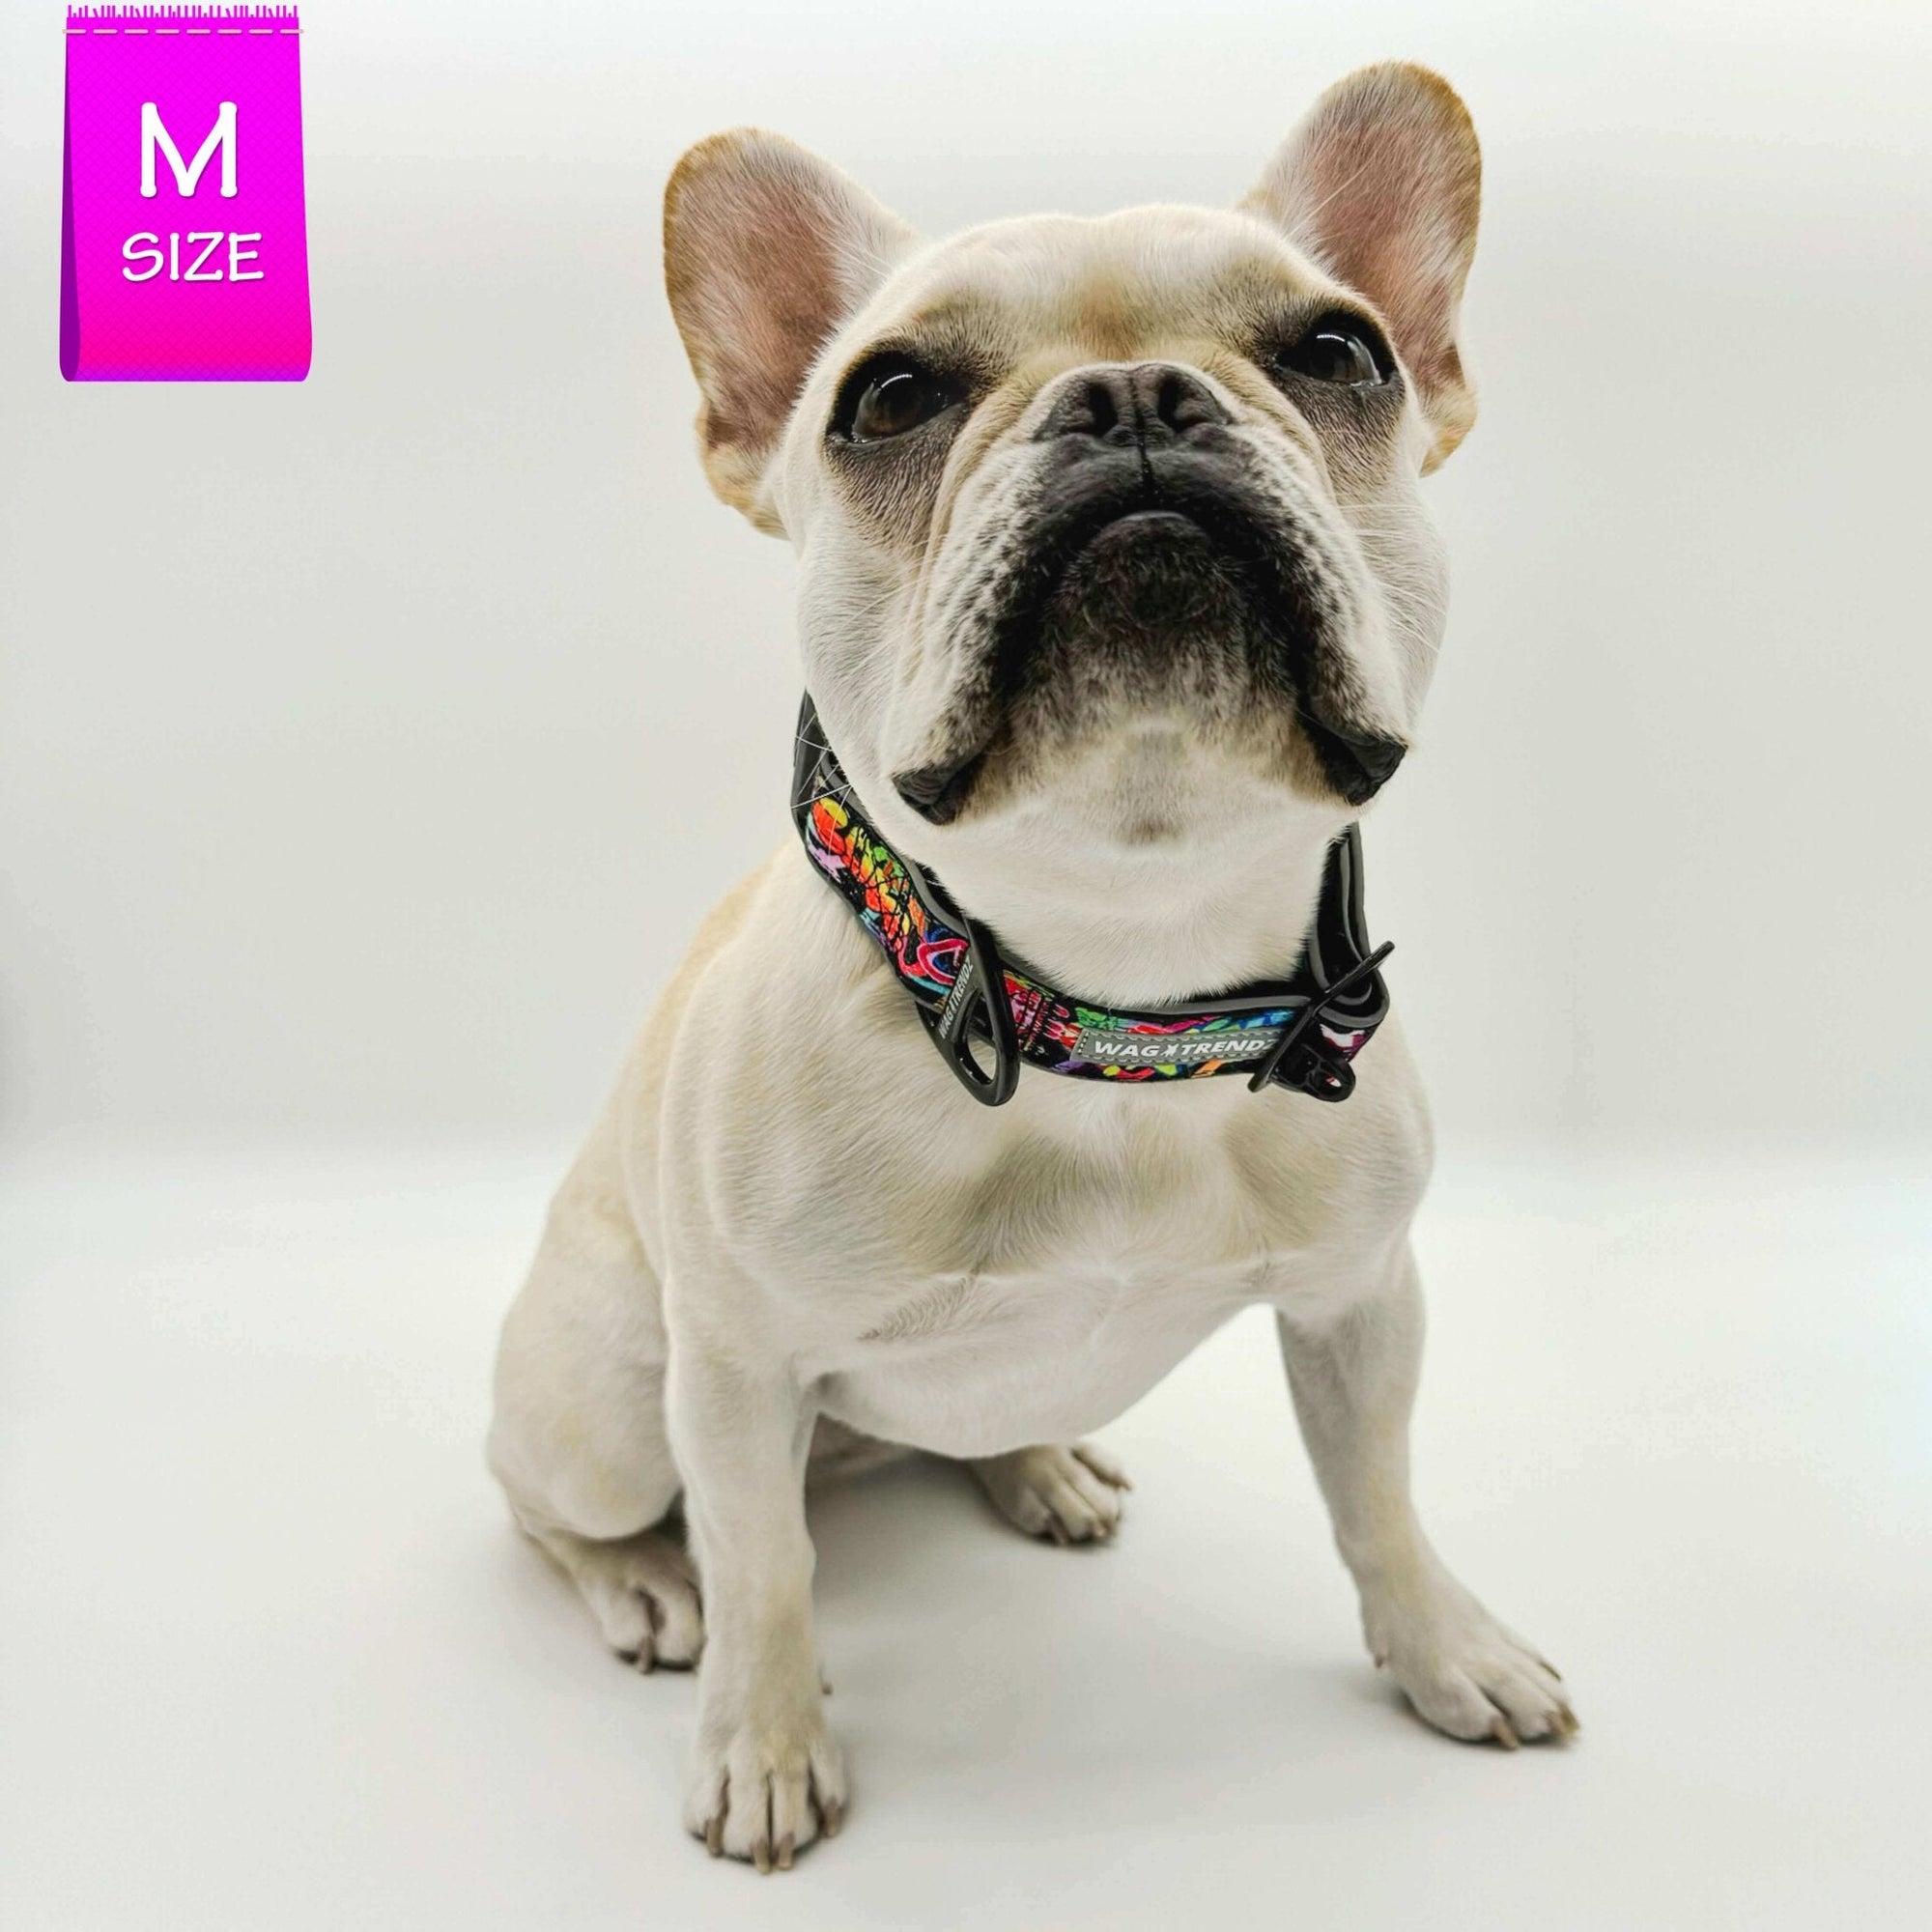 Reflective Dog Collar - French Bulldog wearing multicolored Street Graffiti Reflective Dog Collar size medium - against solid white background - Wag Trendz